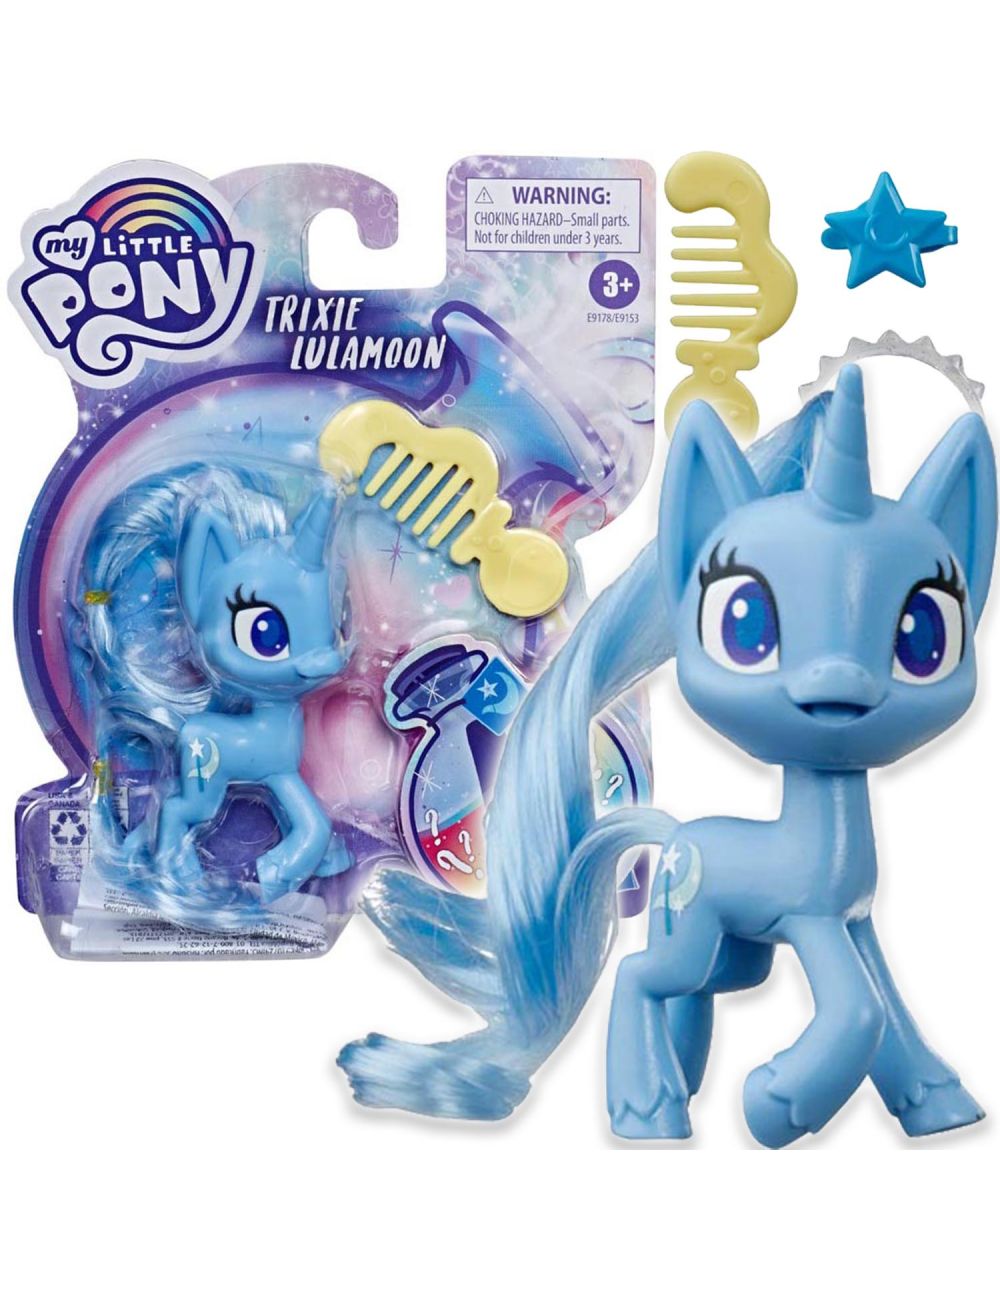 My Little Pony Trixie Lulamoon Magiczny Brokatowy Eliksir Kucyk Hasbro E9178